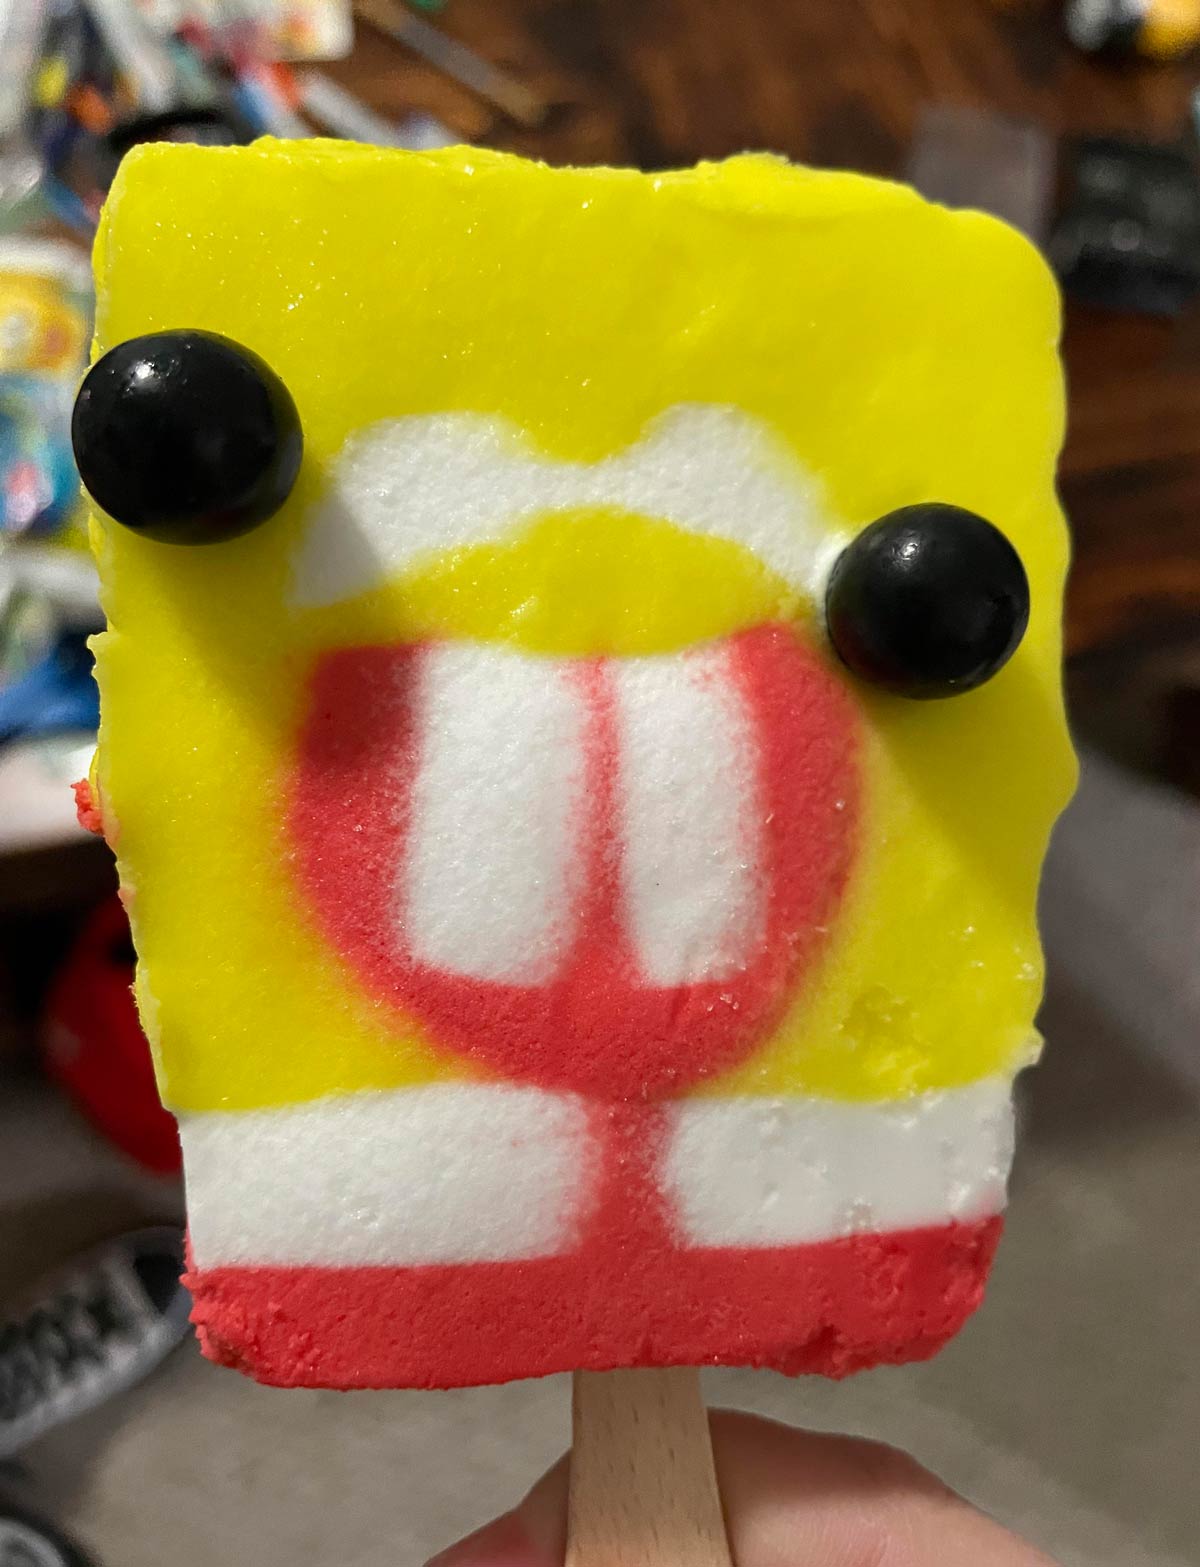 Worst SpongeBob popsicle I’ve gotten